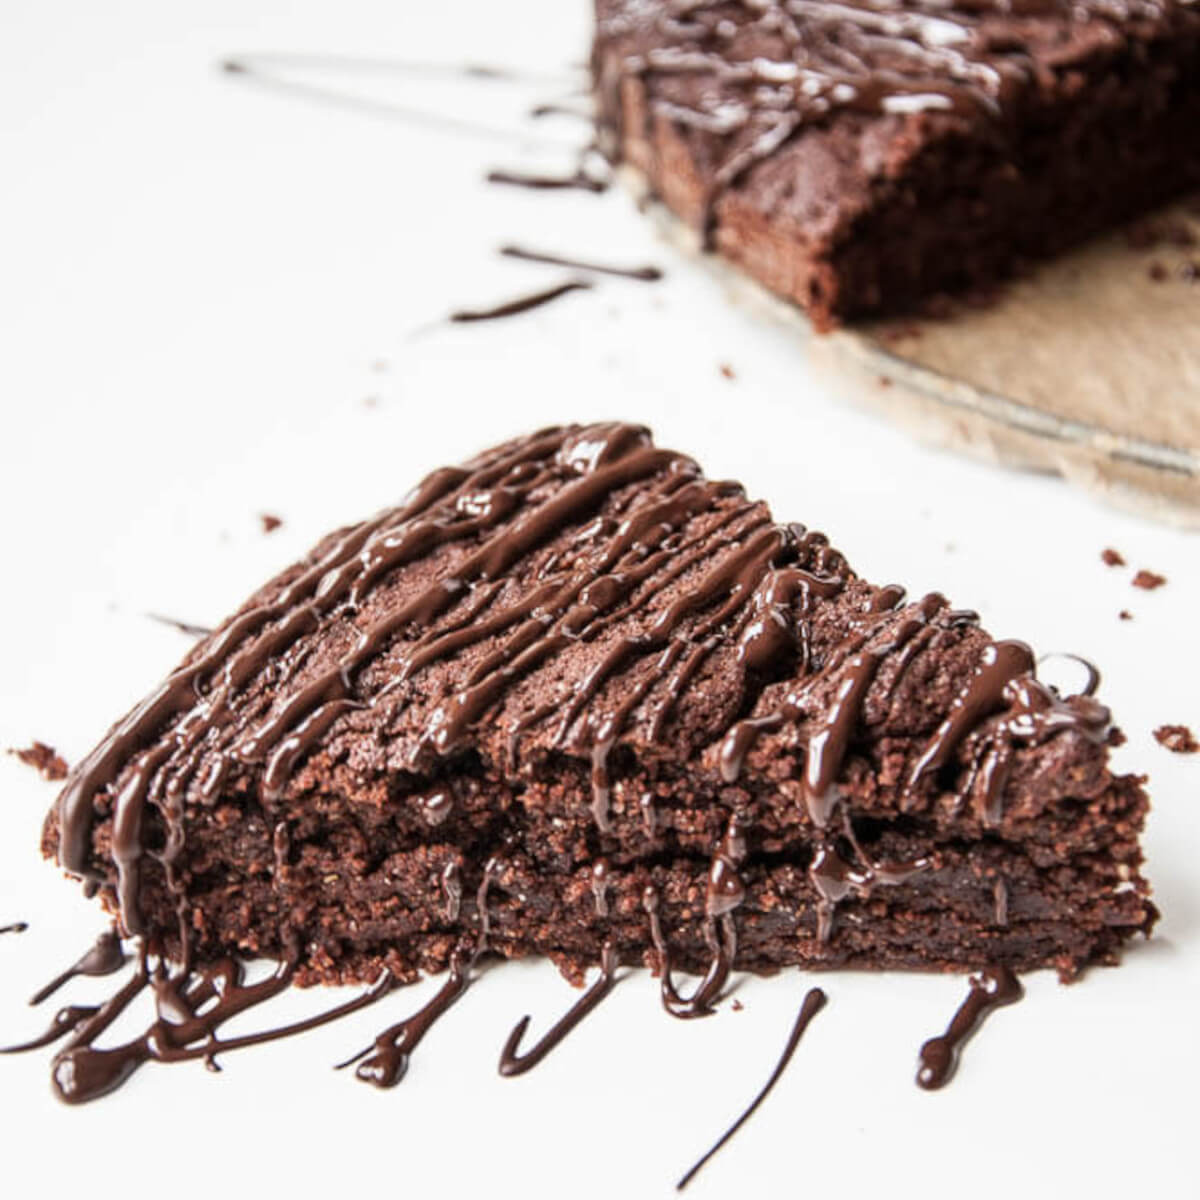 Chocolate Olive Oil Cake Recipe - Vegan Family Recipes